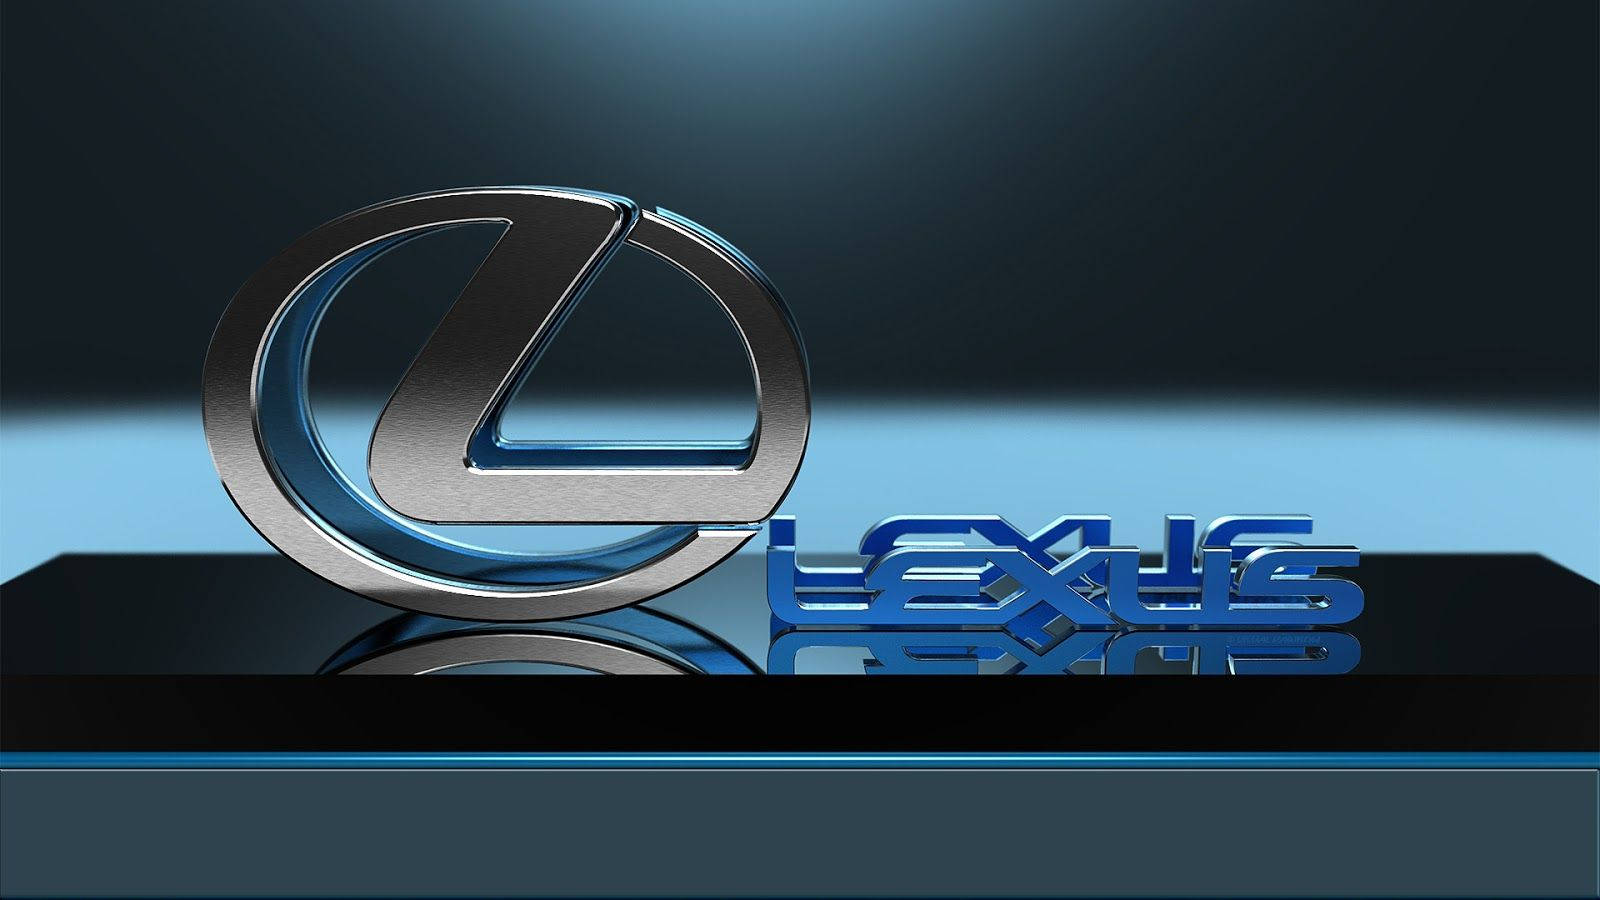 Cool Silver Lexus Logo Background